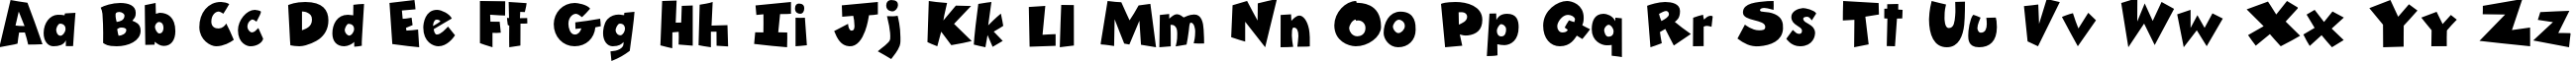 Пример написания английского алфавита шрифтом Zubilo Black